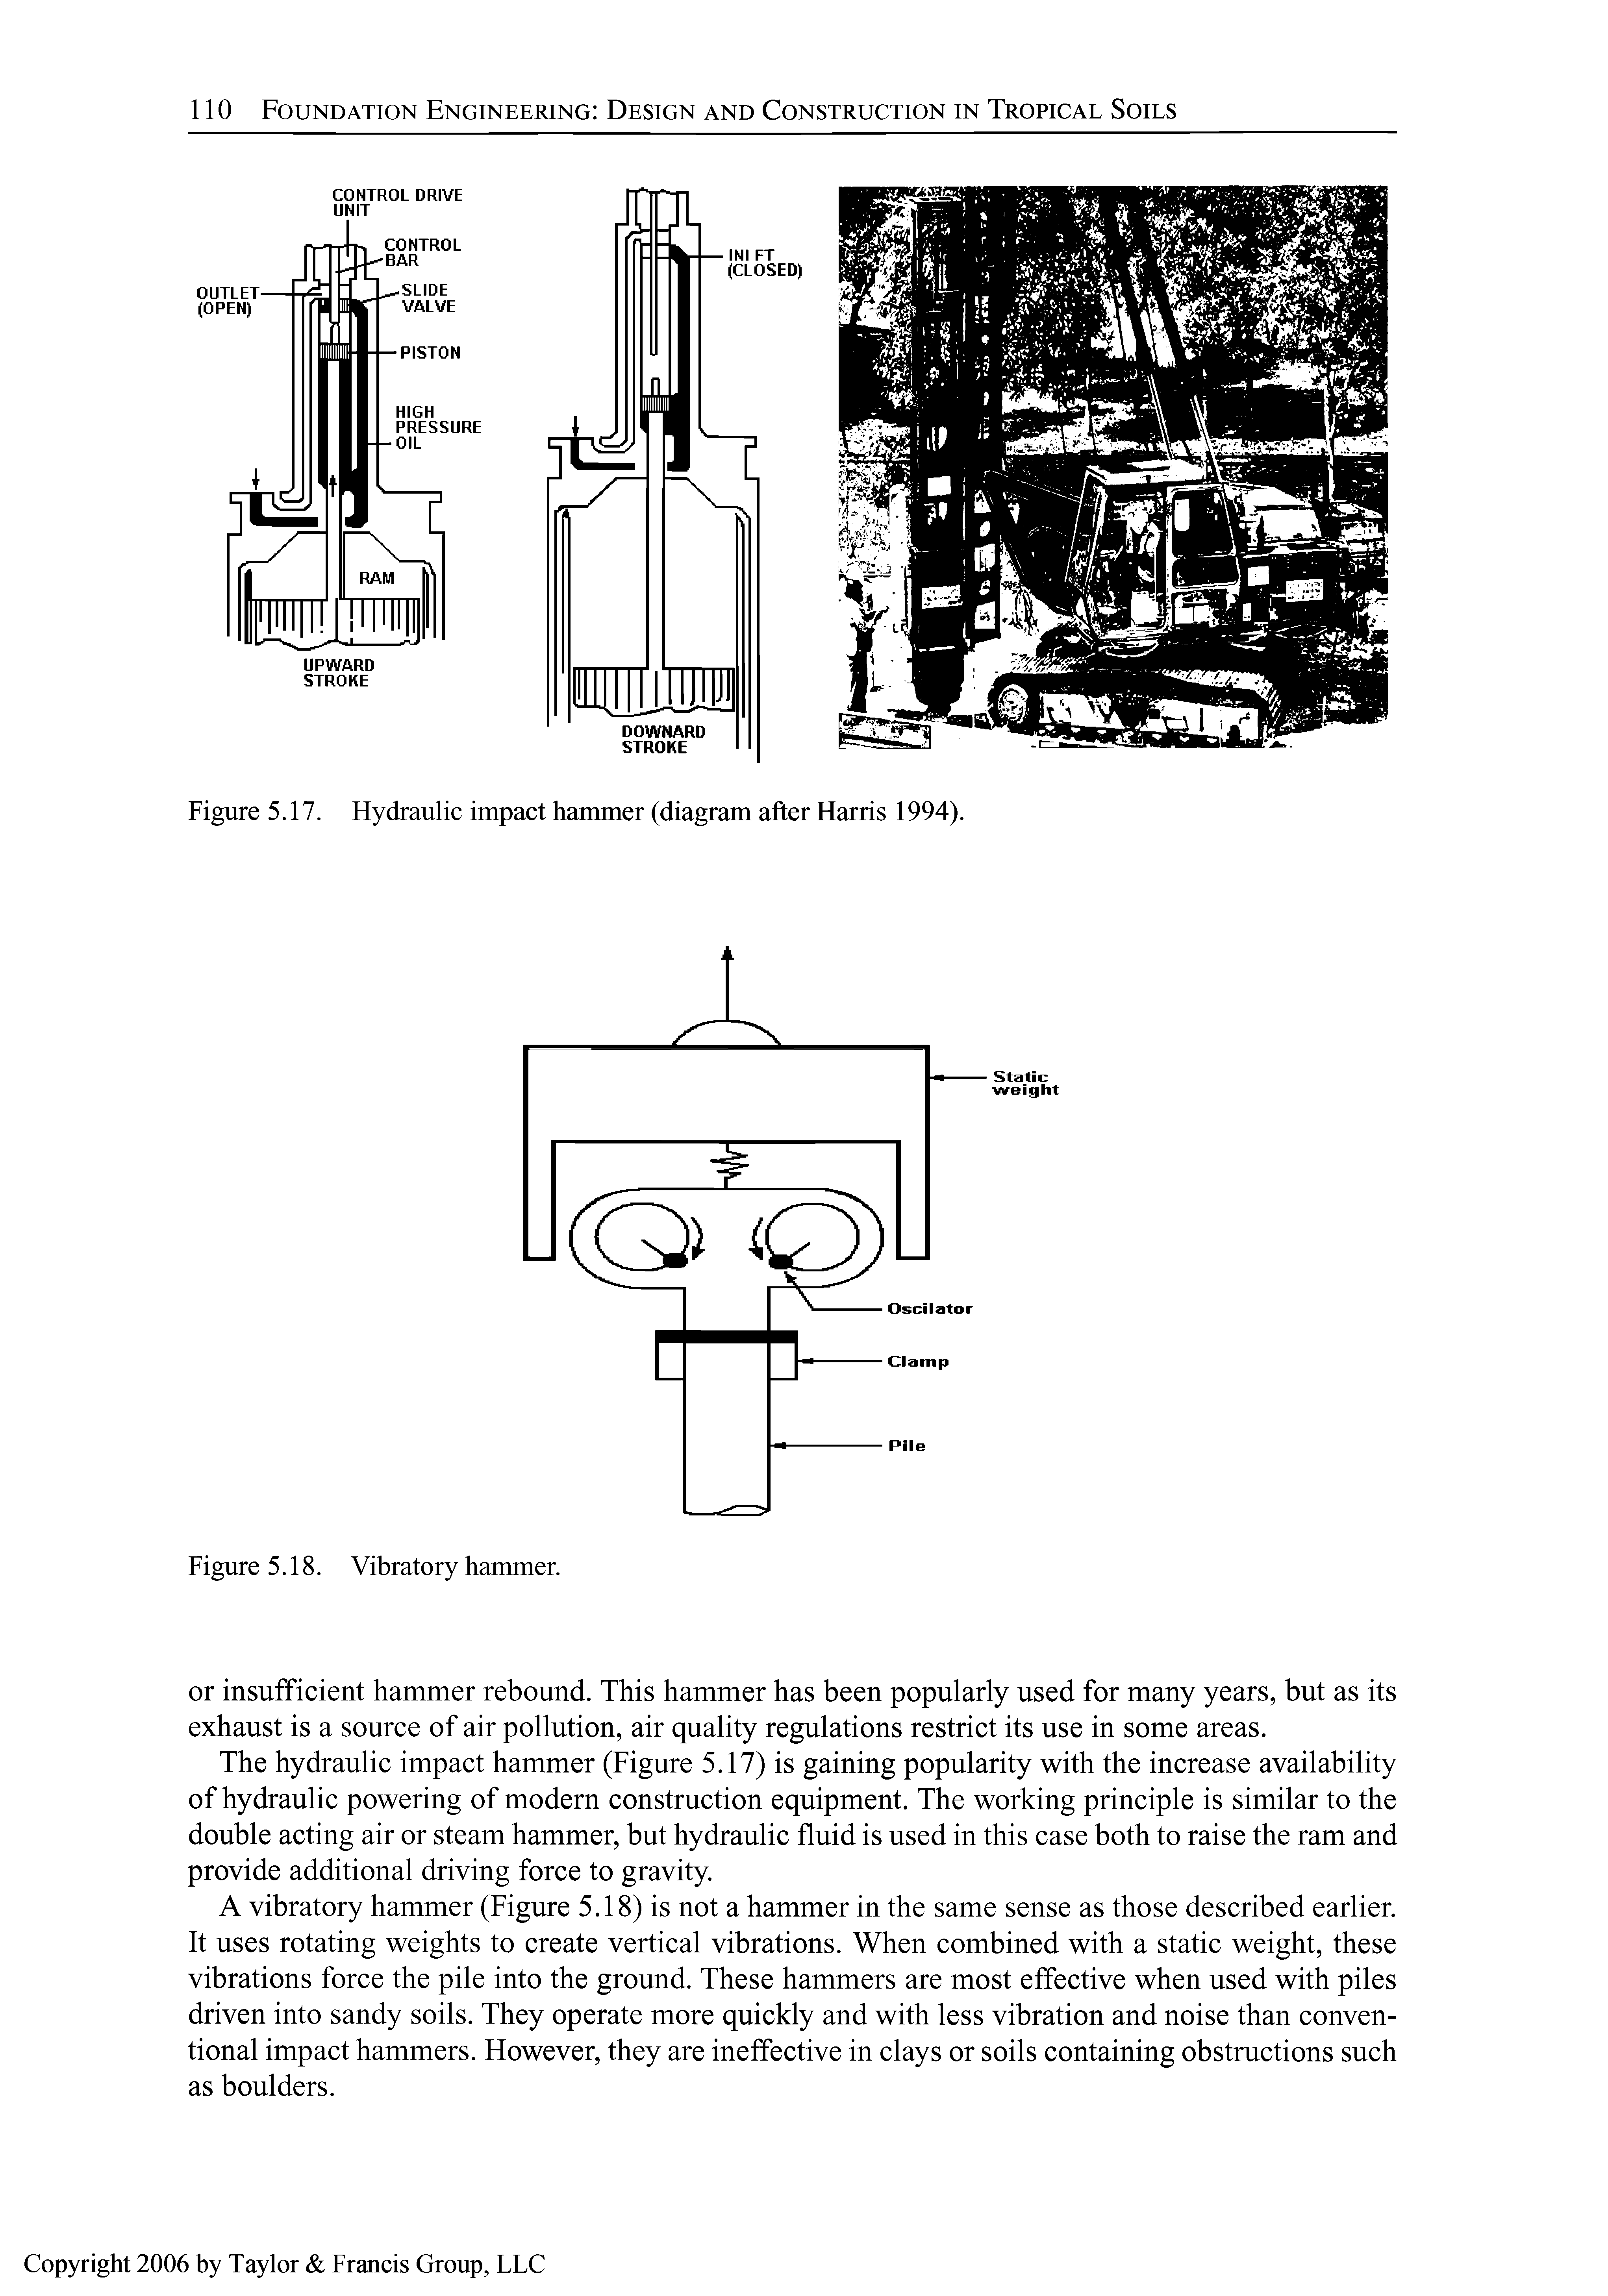 Figure 5.17. Hydraulic impact hammer (diagram after Harris 1994).